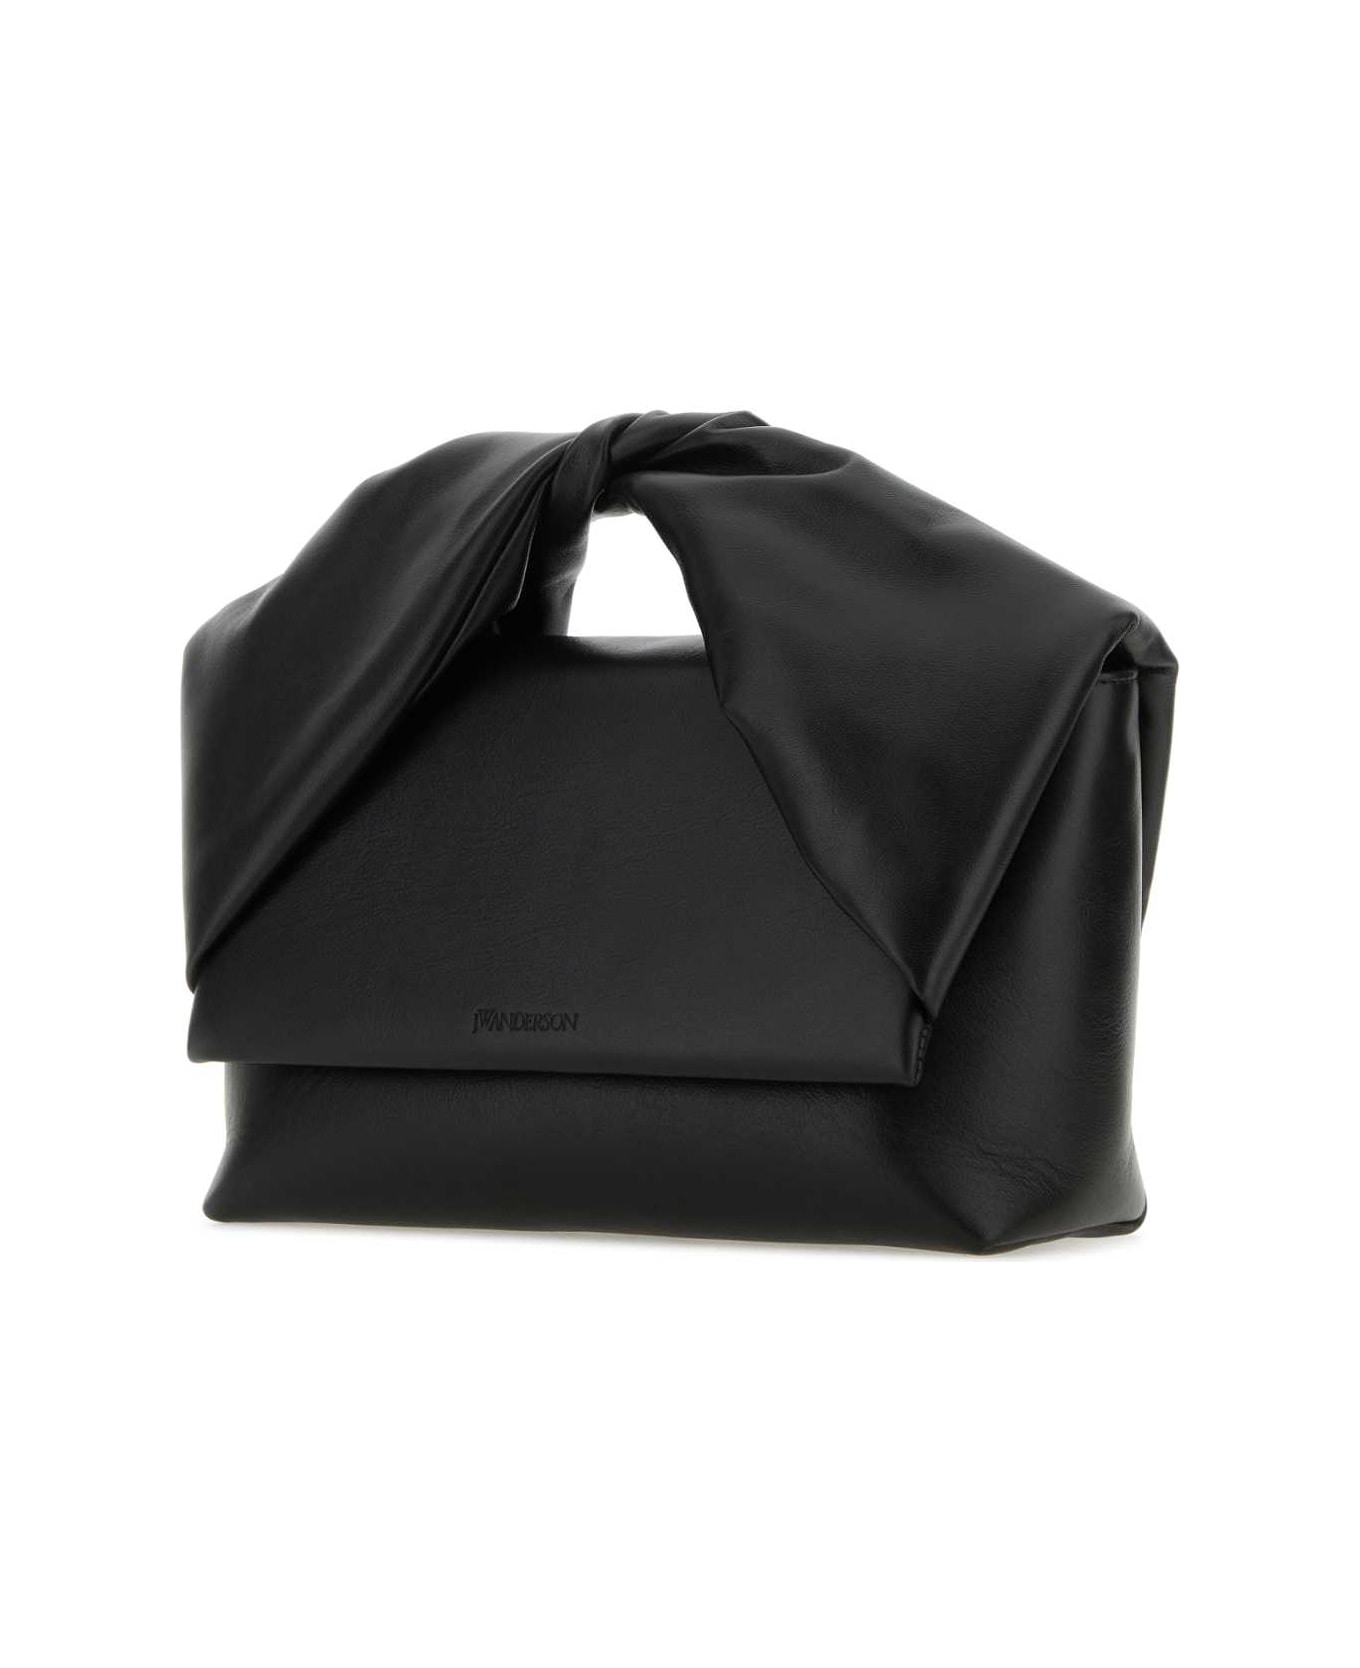 J.W. Anderson Black Nappa Leather Twister Handbag - Black